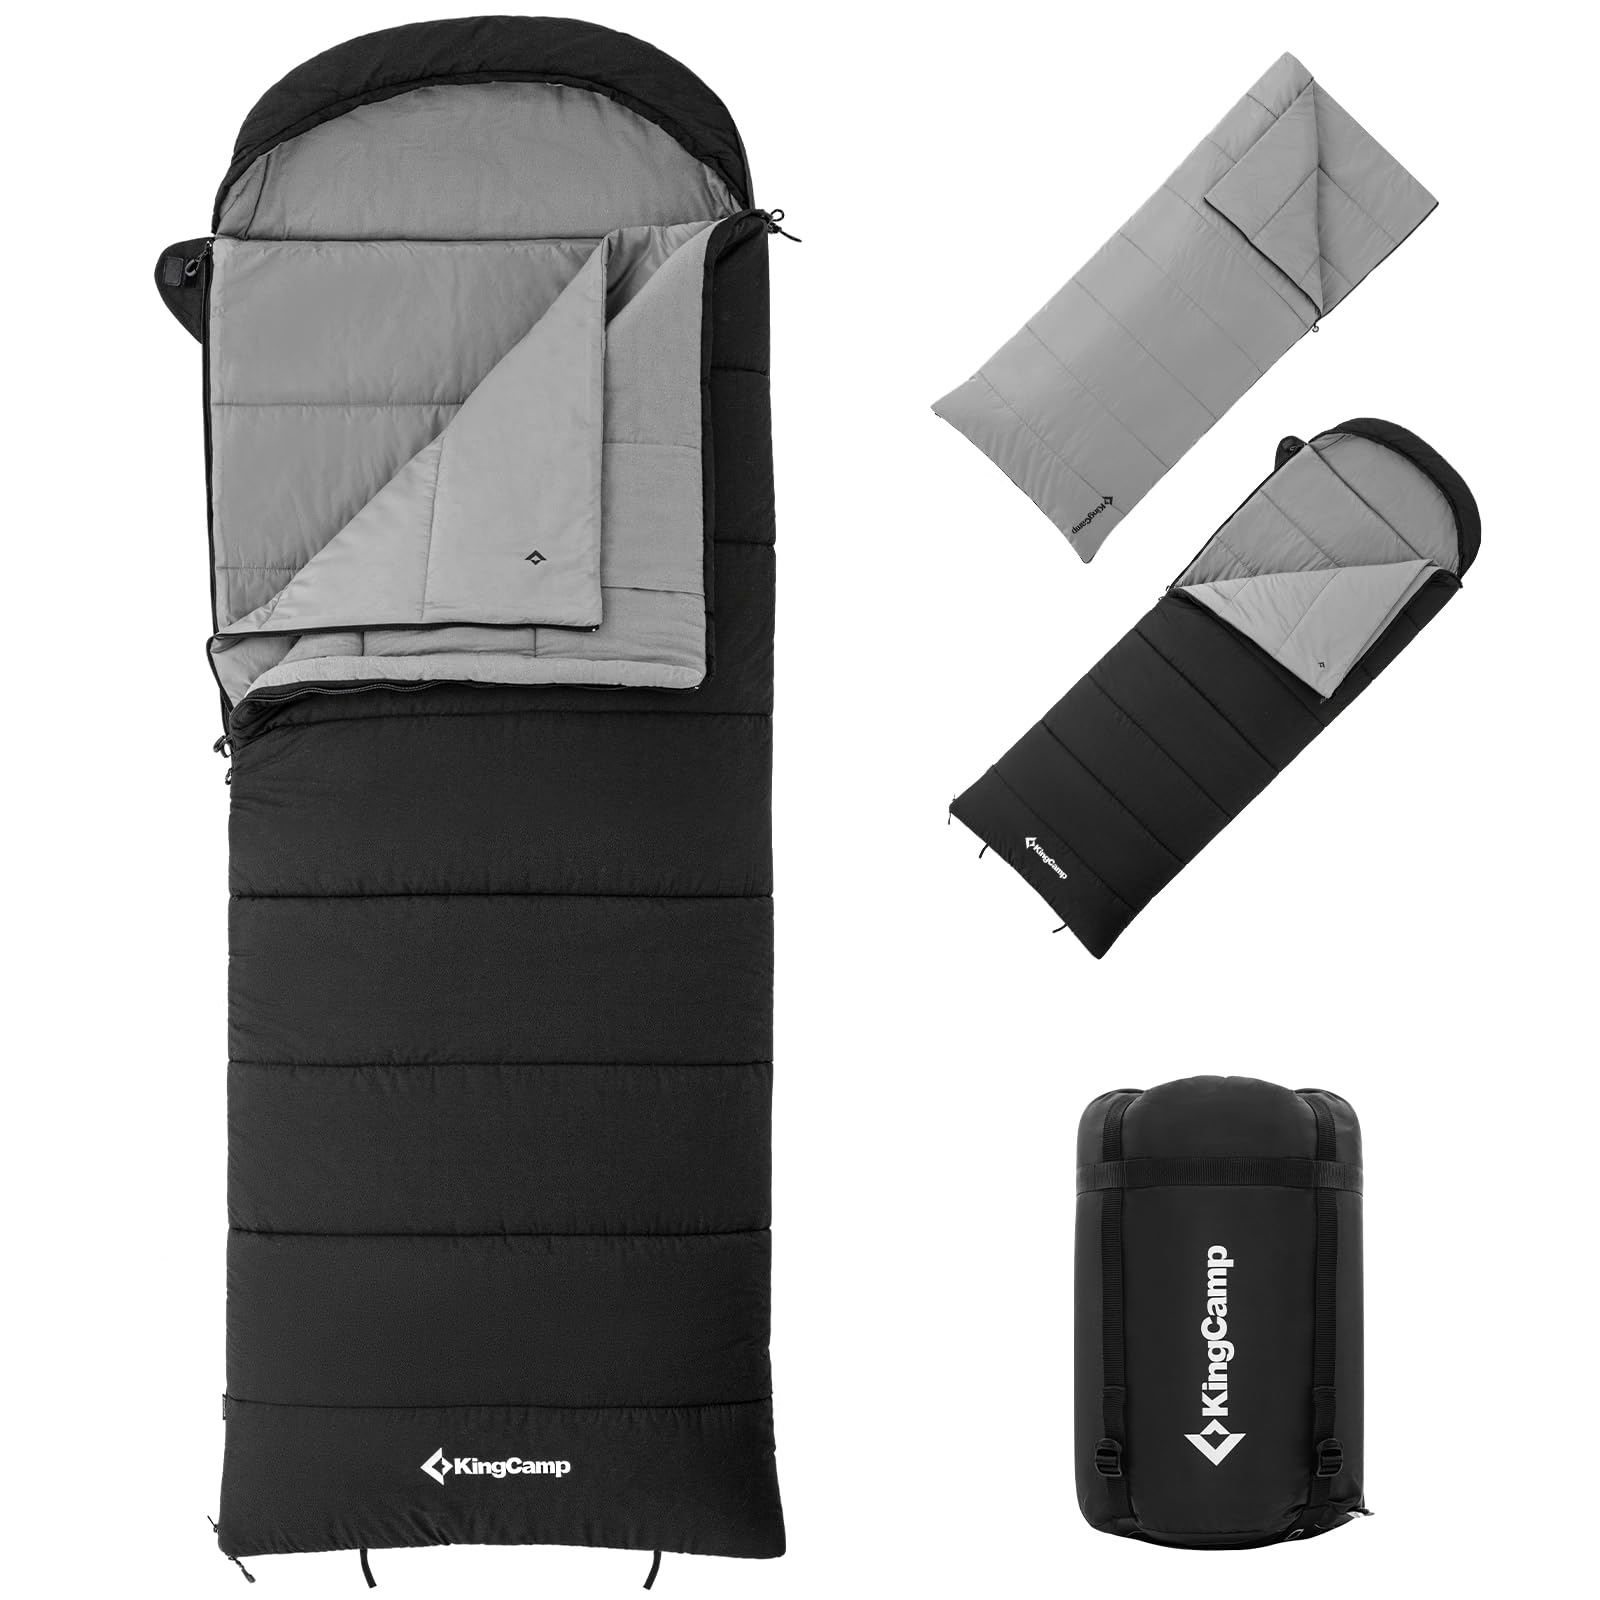 KingCamp sleeping bag